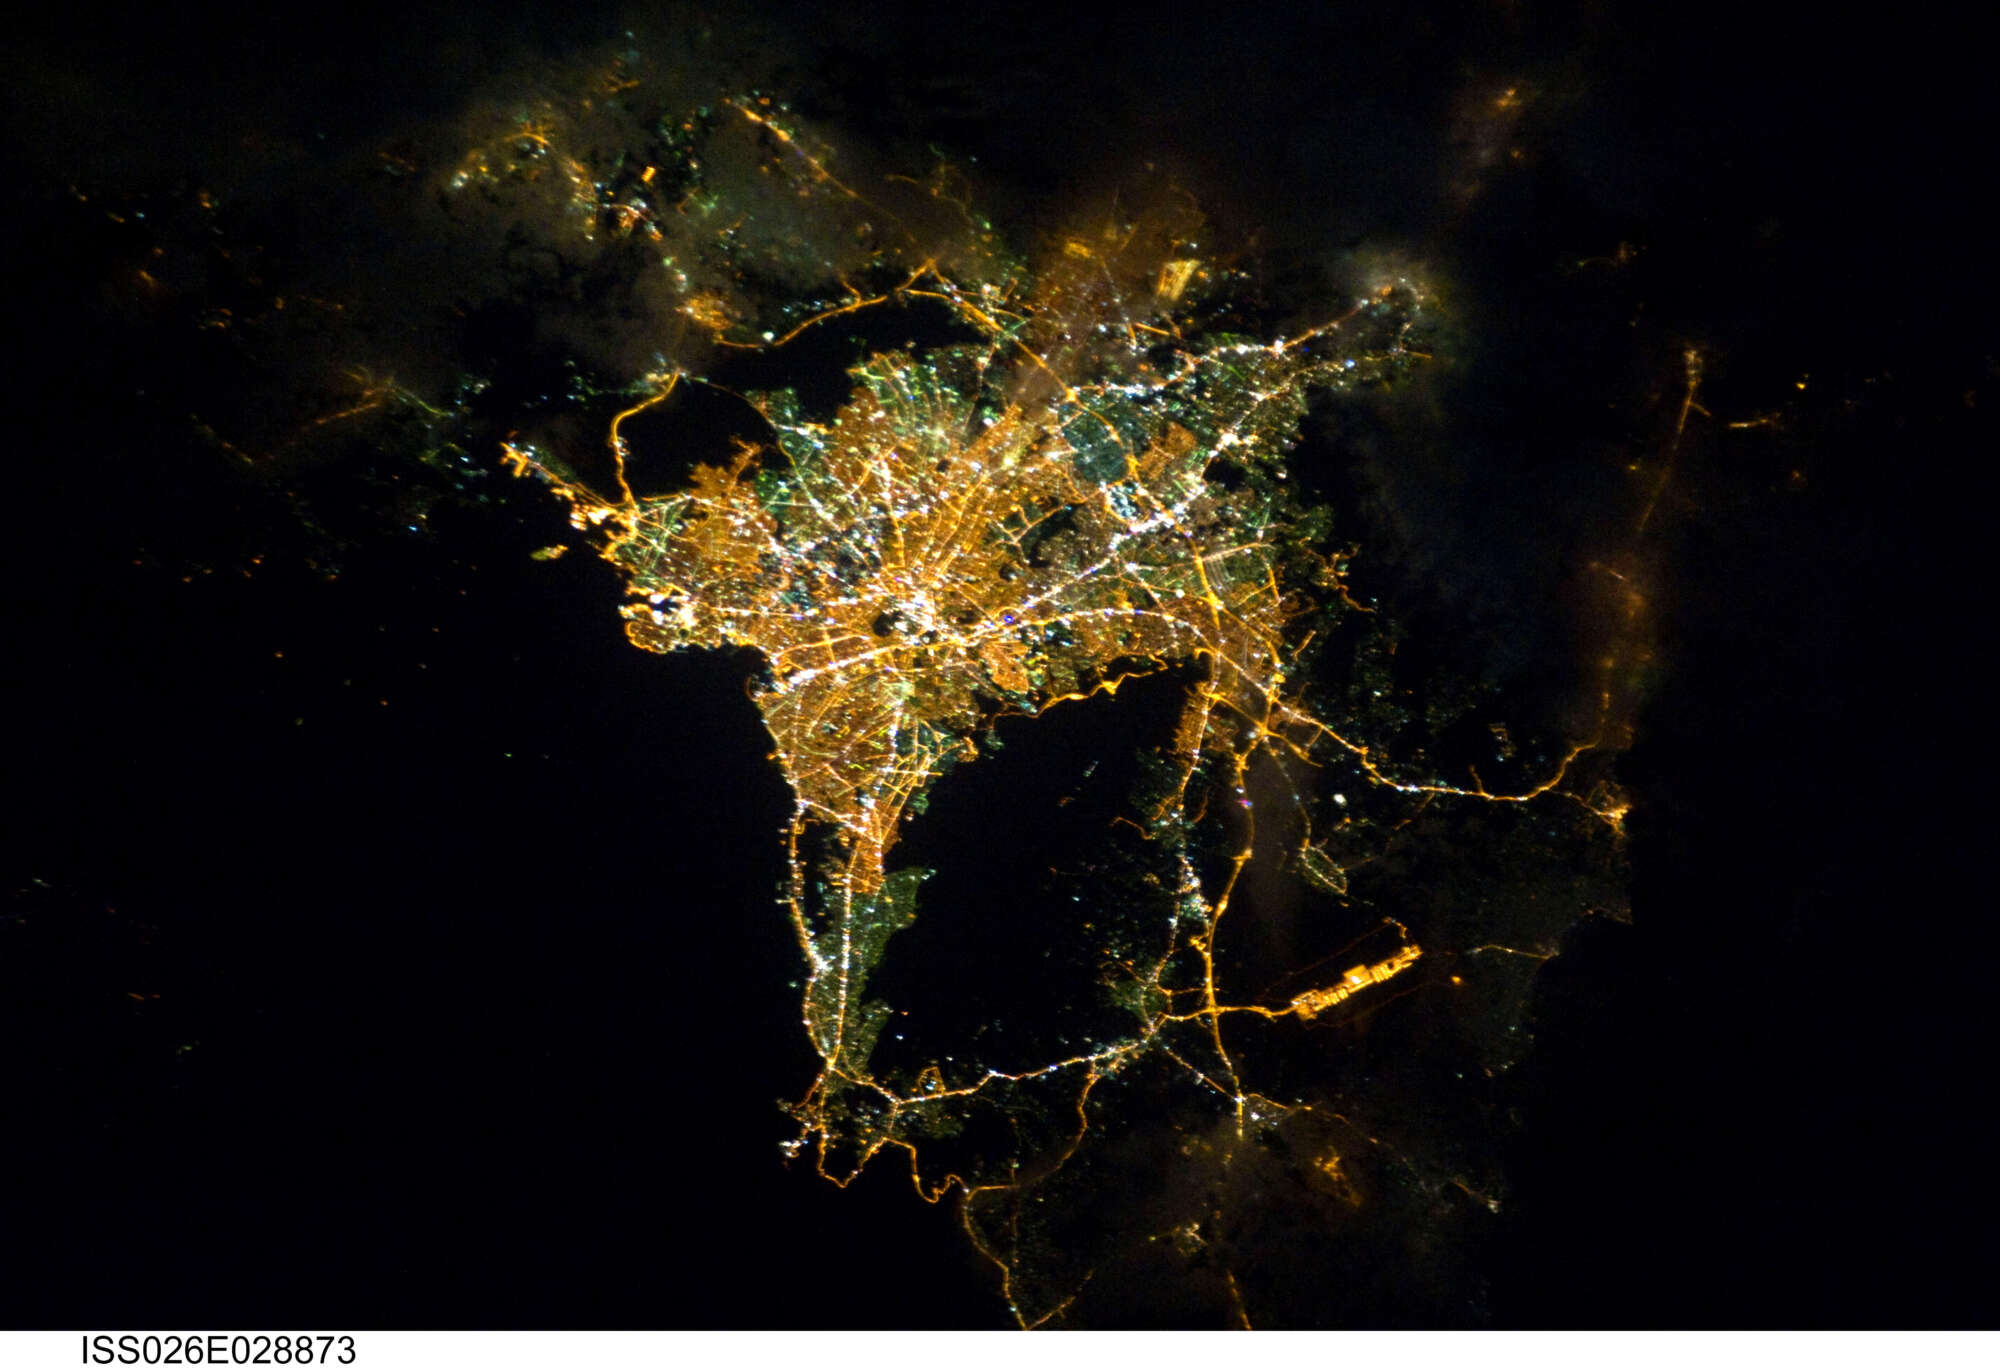 H νυχτερινή Αθήνα φωτοβολεί και κερδίζει την προσοχή του ιταλού αστροναύτη Πάολο Νέσπολι 